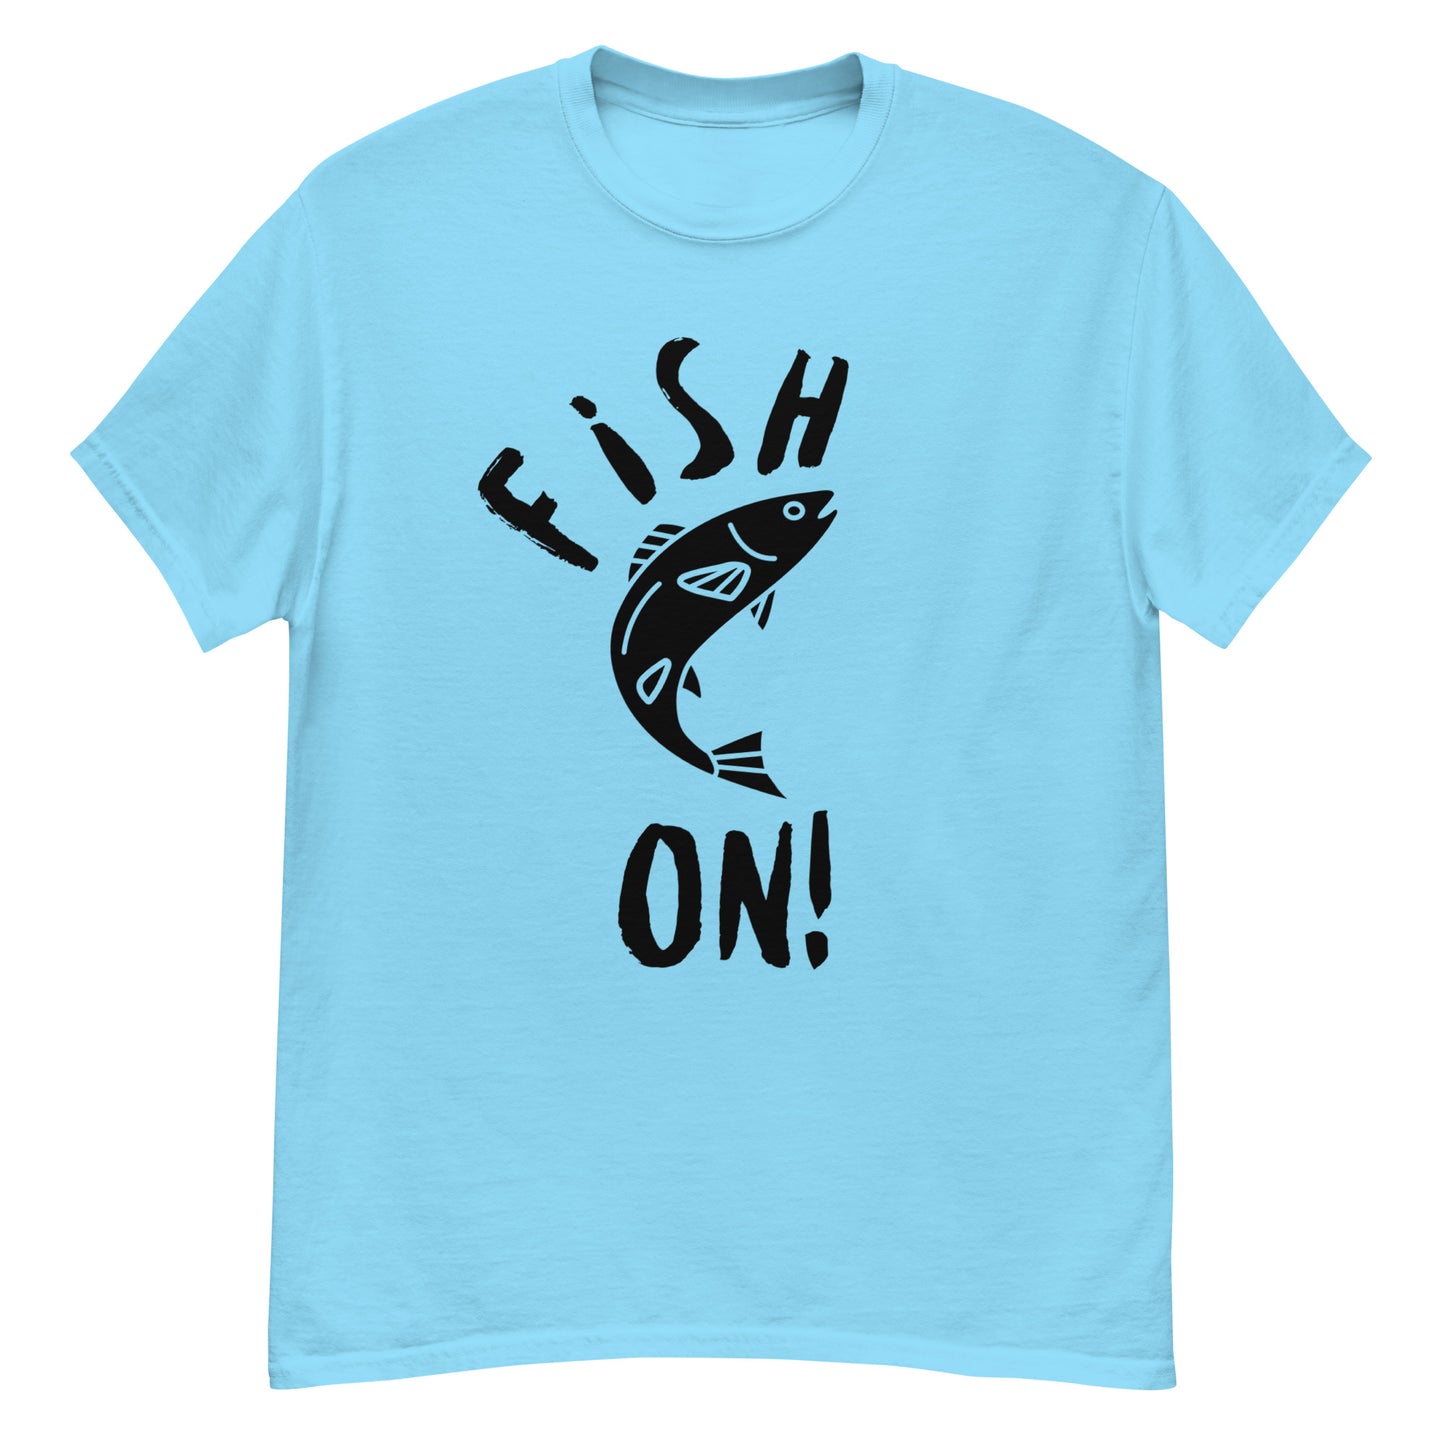 Fish on! Classic tee (black design)